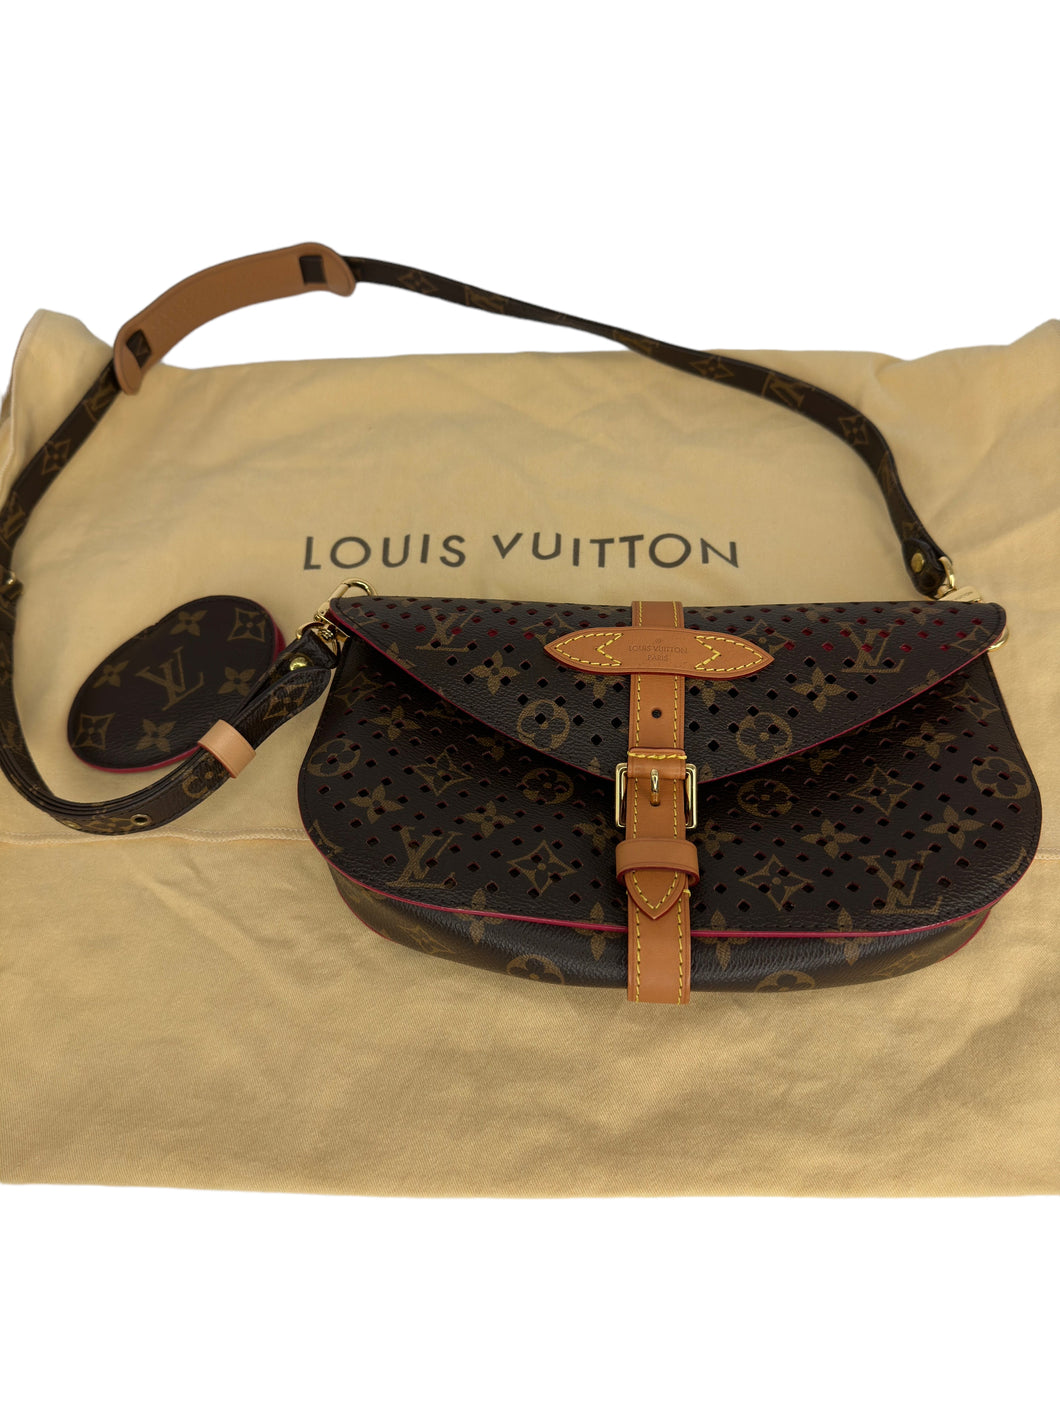 Tracolla Louis Vuitton Saumur limited edition Croiser 2012